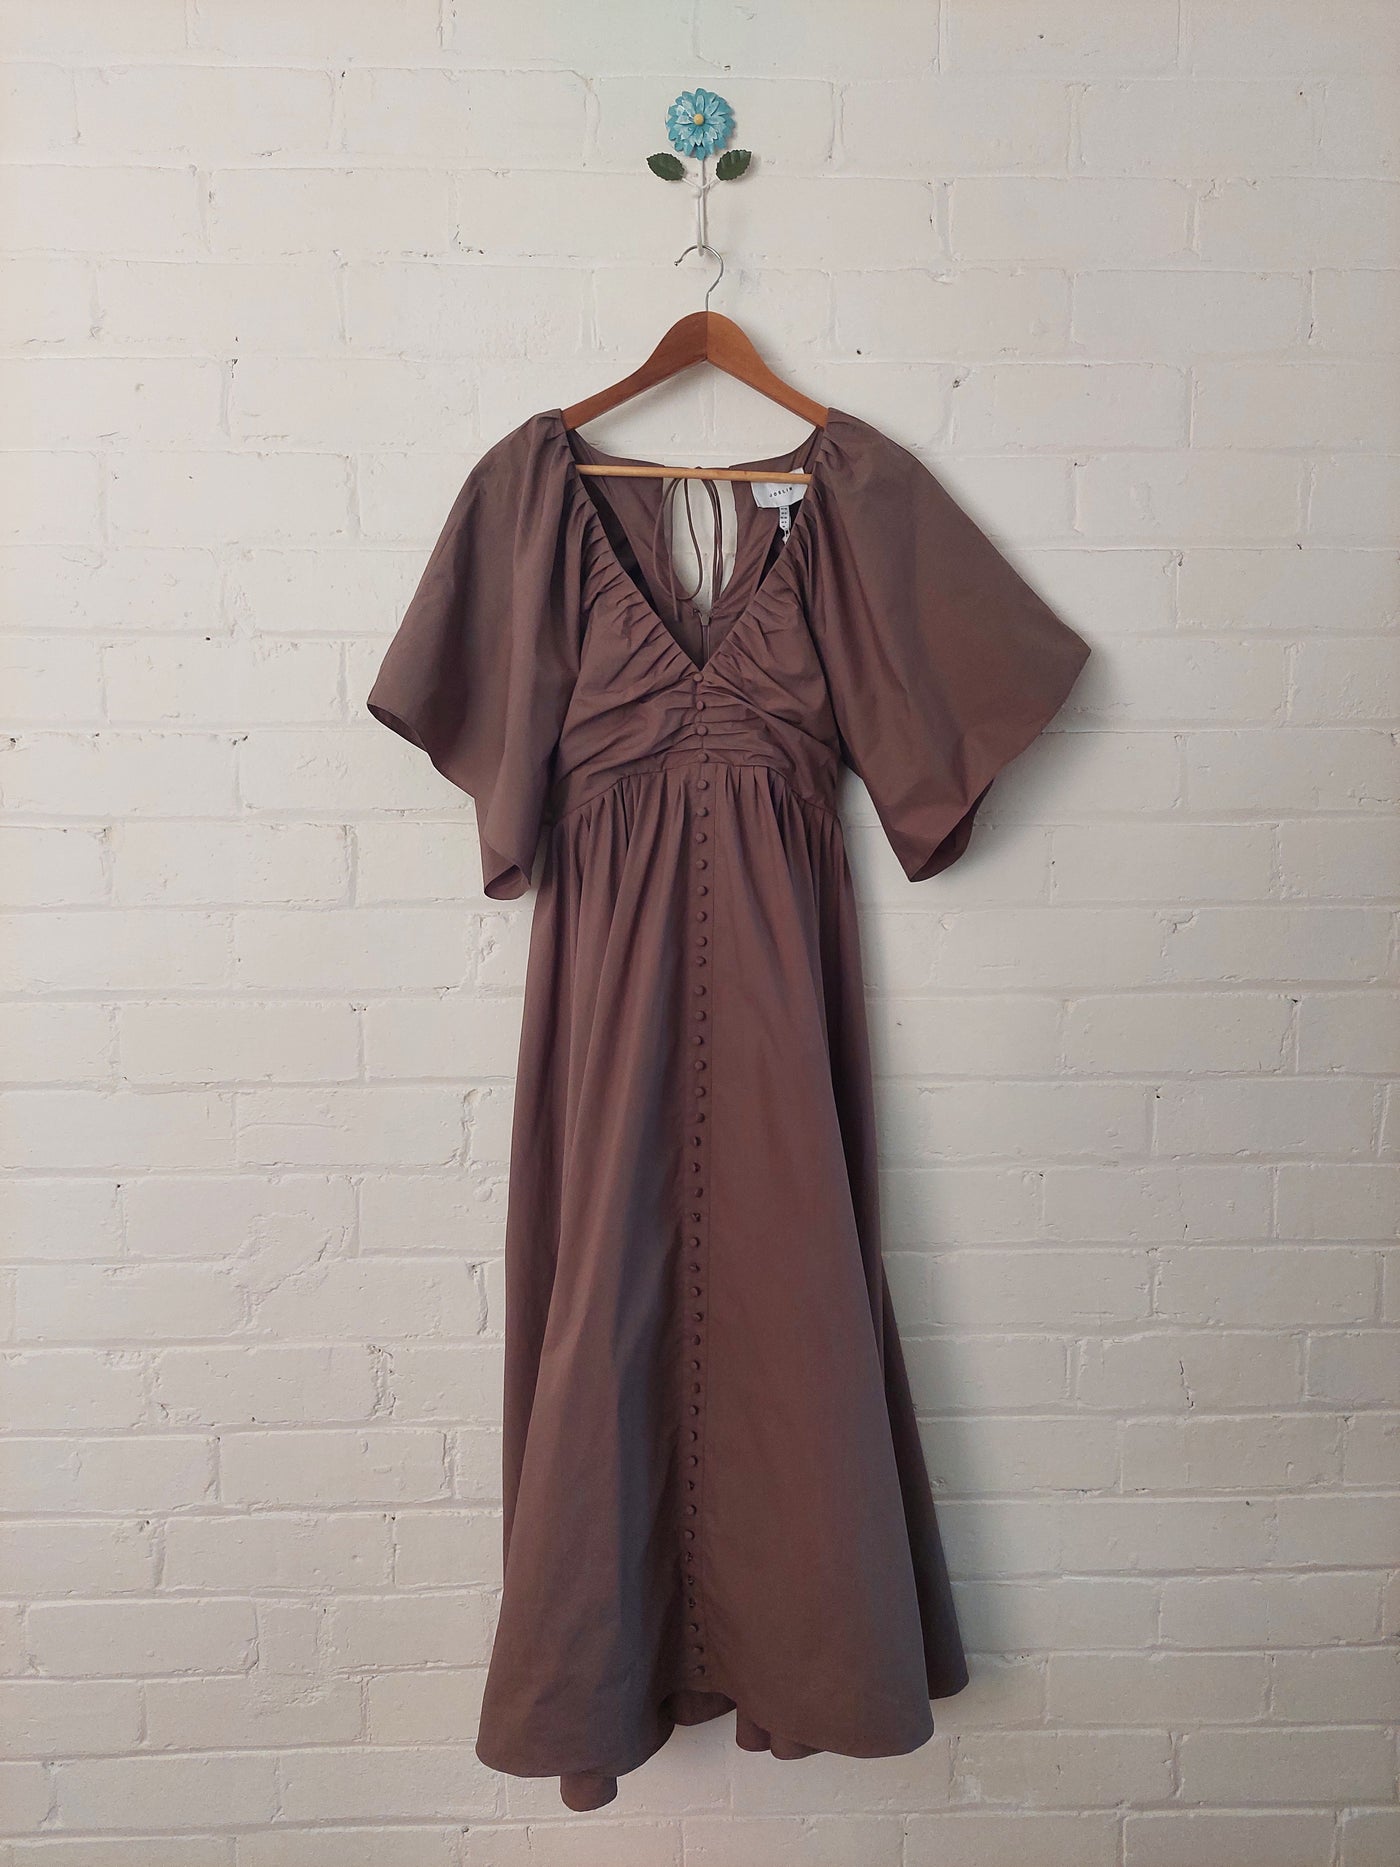 JOSLIN BNWT Sakura Organic Cotton Midi Dress - Hazelnut Brown, Size M (AU 10 / US 6)